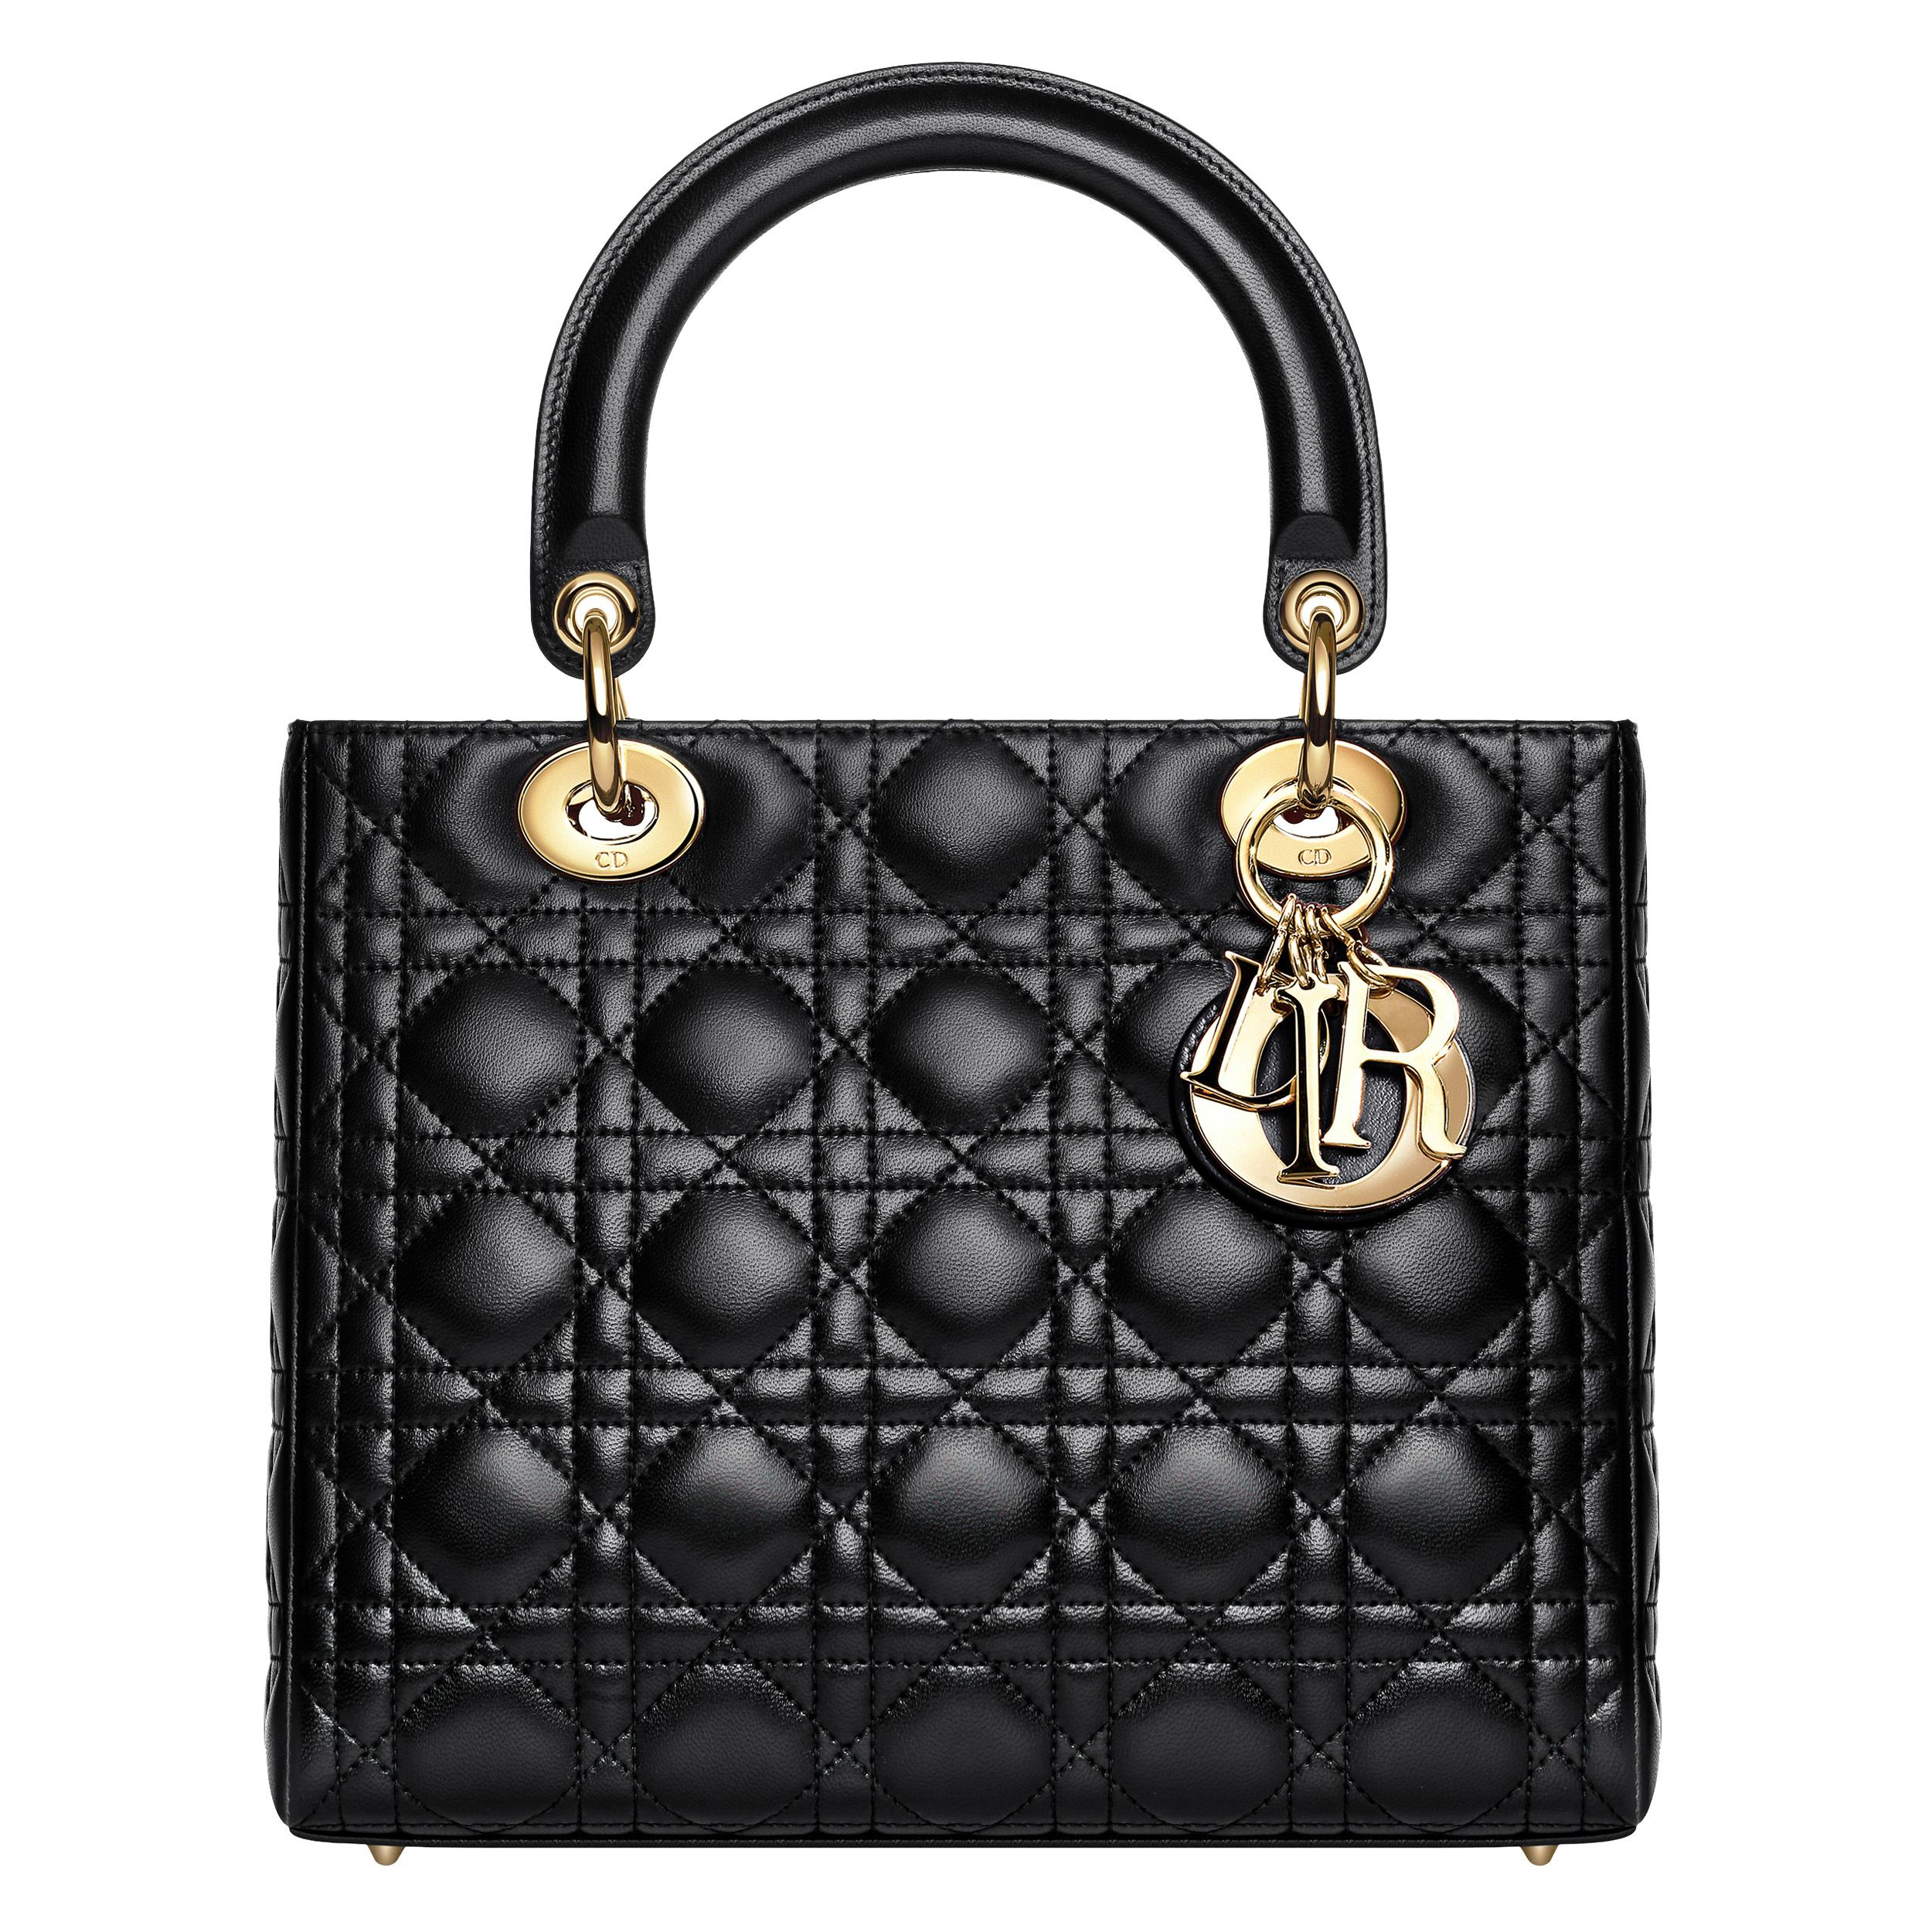 Hire a Lady Dior handbag and other designer handbags | Elite Couture